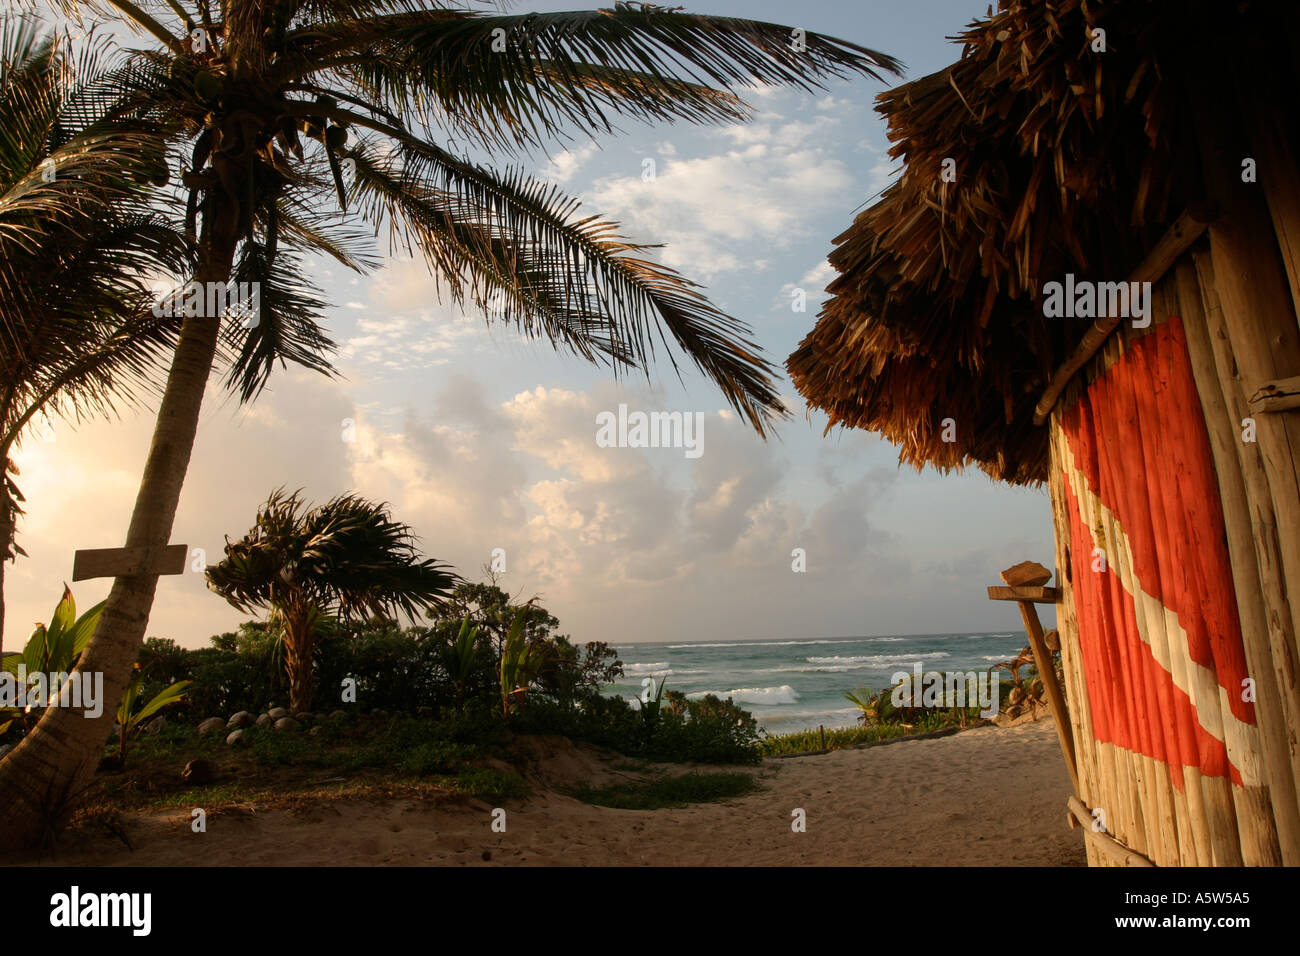 Cabanas at Tulum Mexico Stock Photo